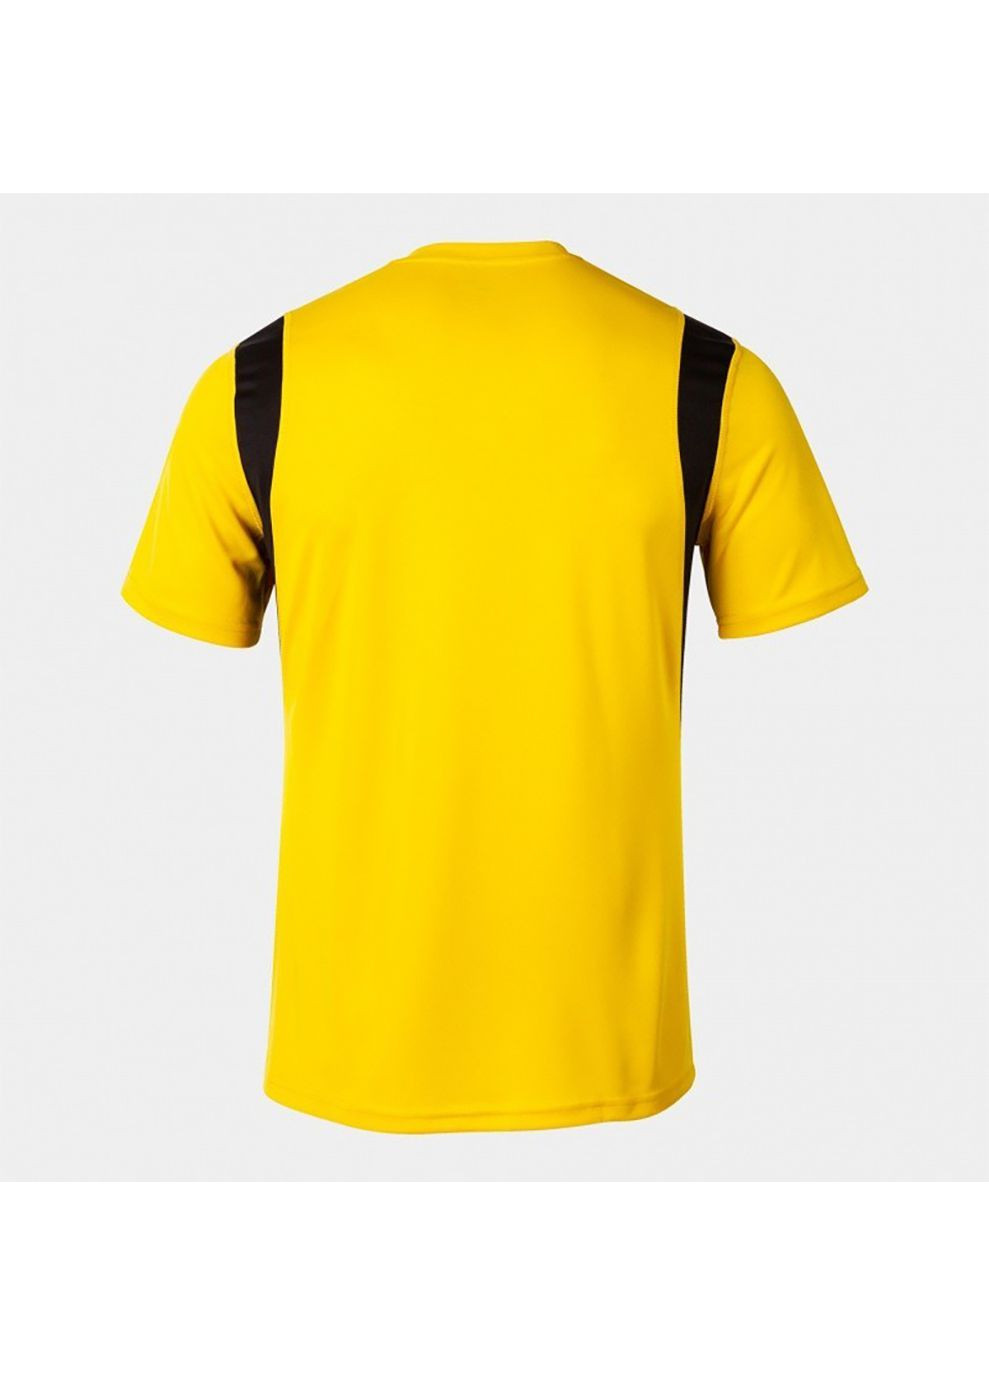 Жовта футболка t-shirt dinamo yellow s/s жовтий 100446.900 Joma